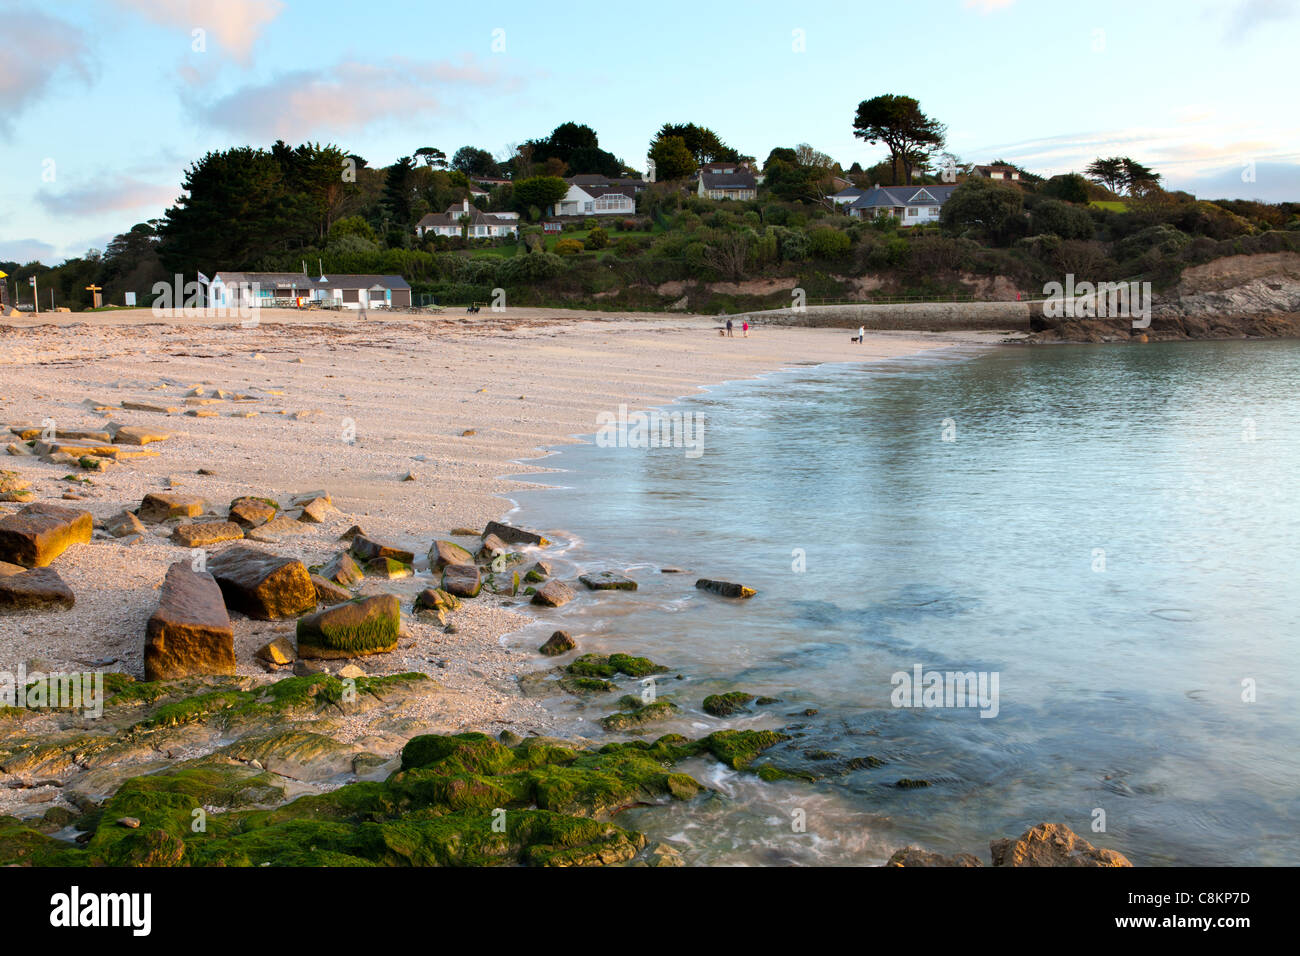 The beach at Swanpool Falmouth Cornwall England UK Stock Photo